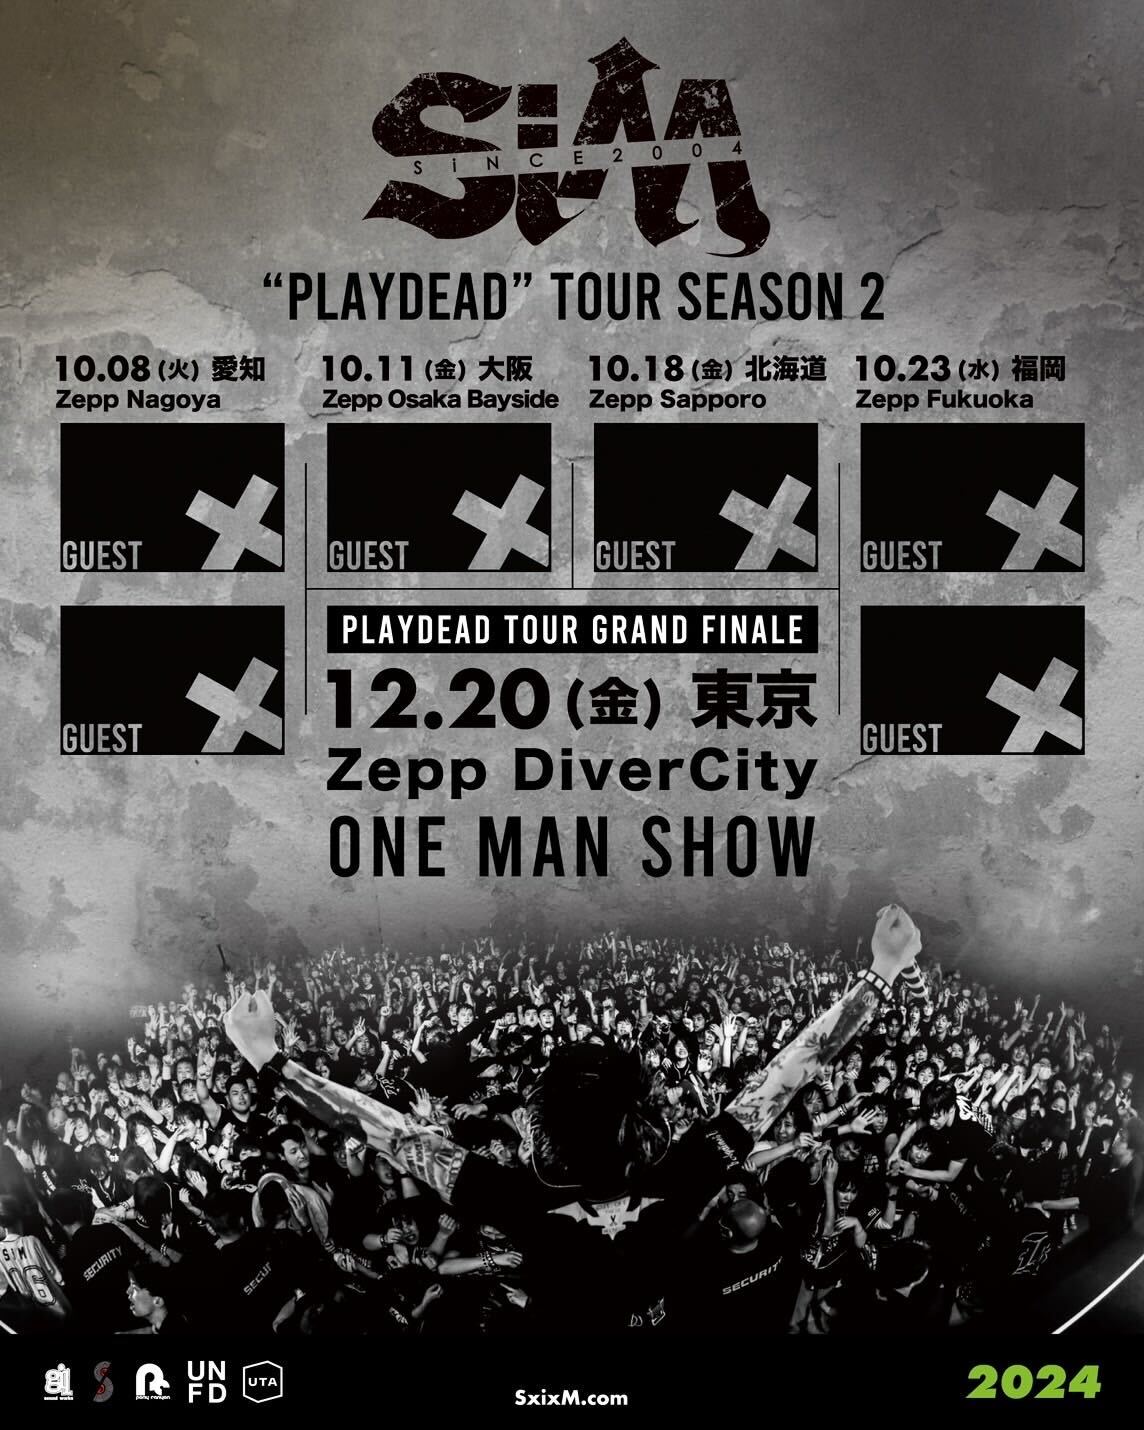 "PLAYDEAD" TOUR SEASON 2